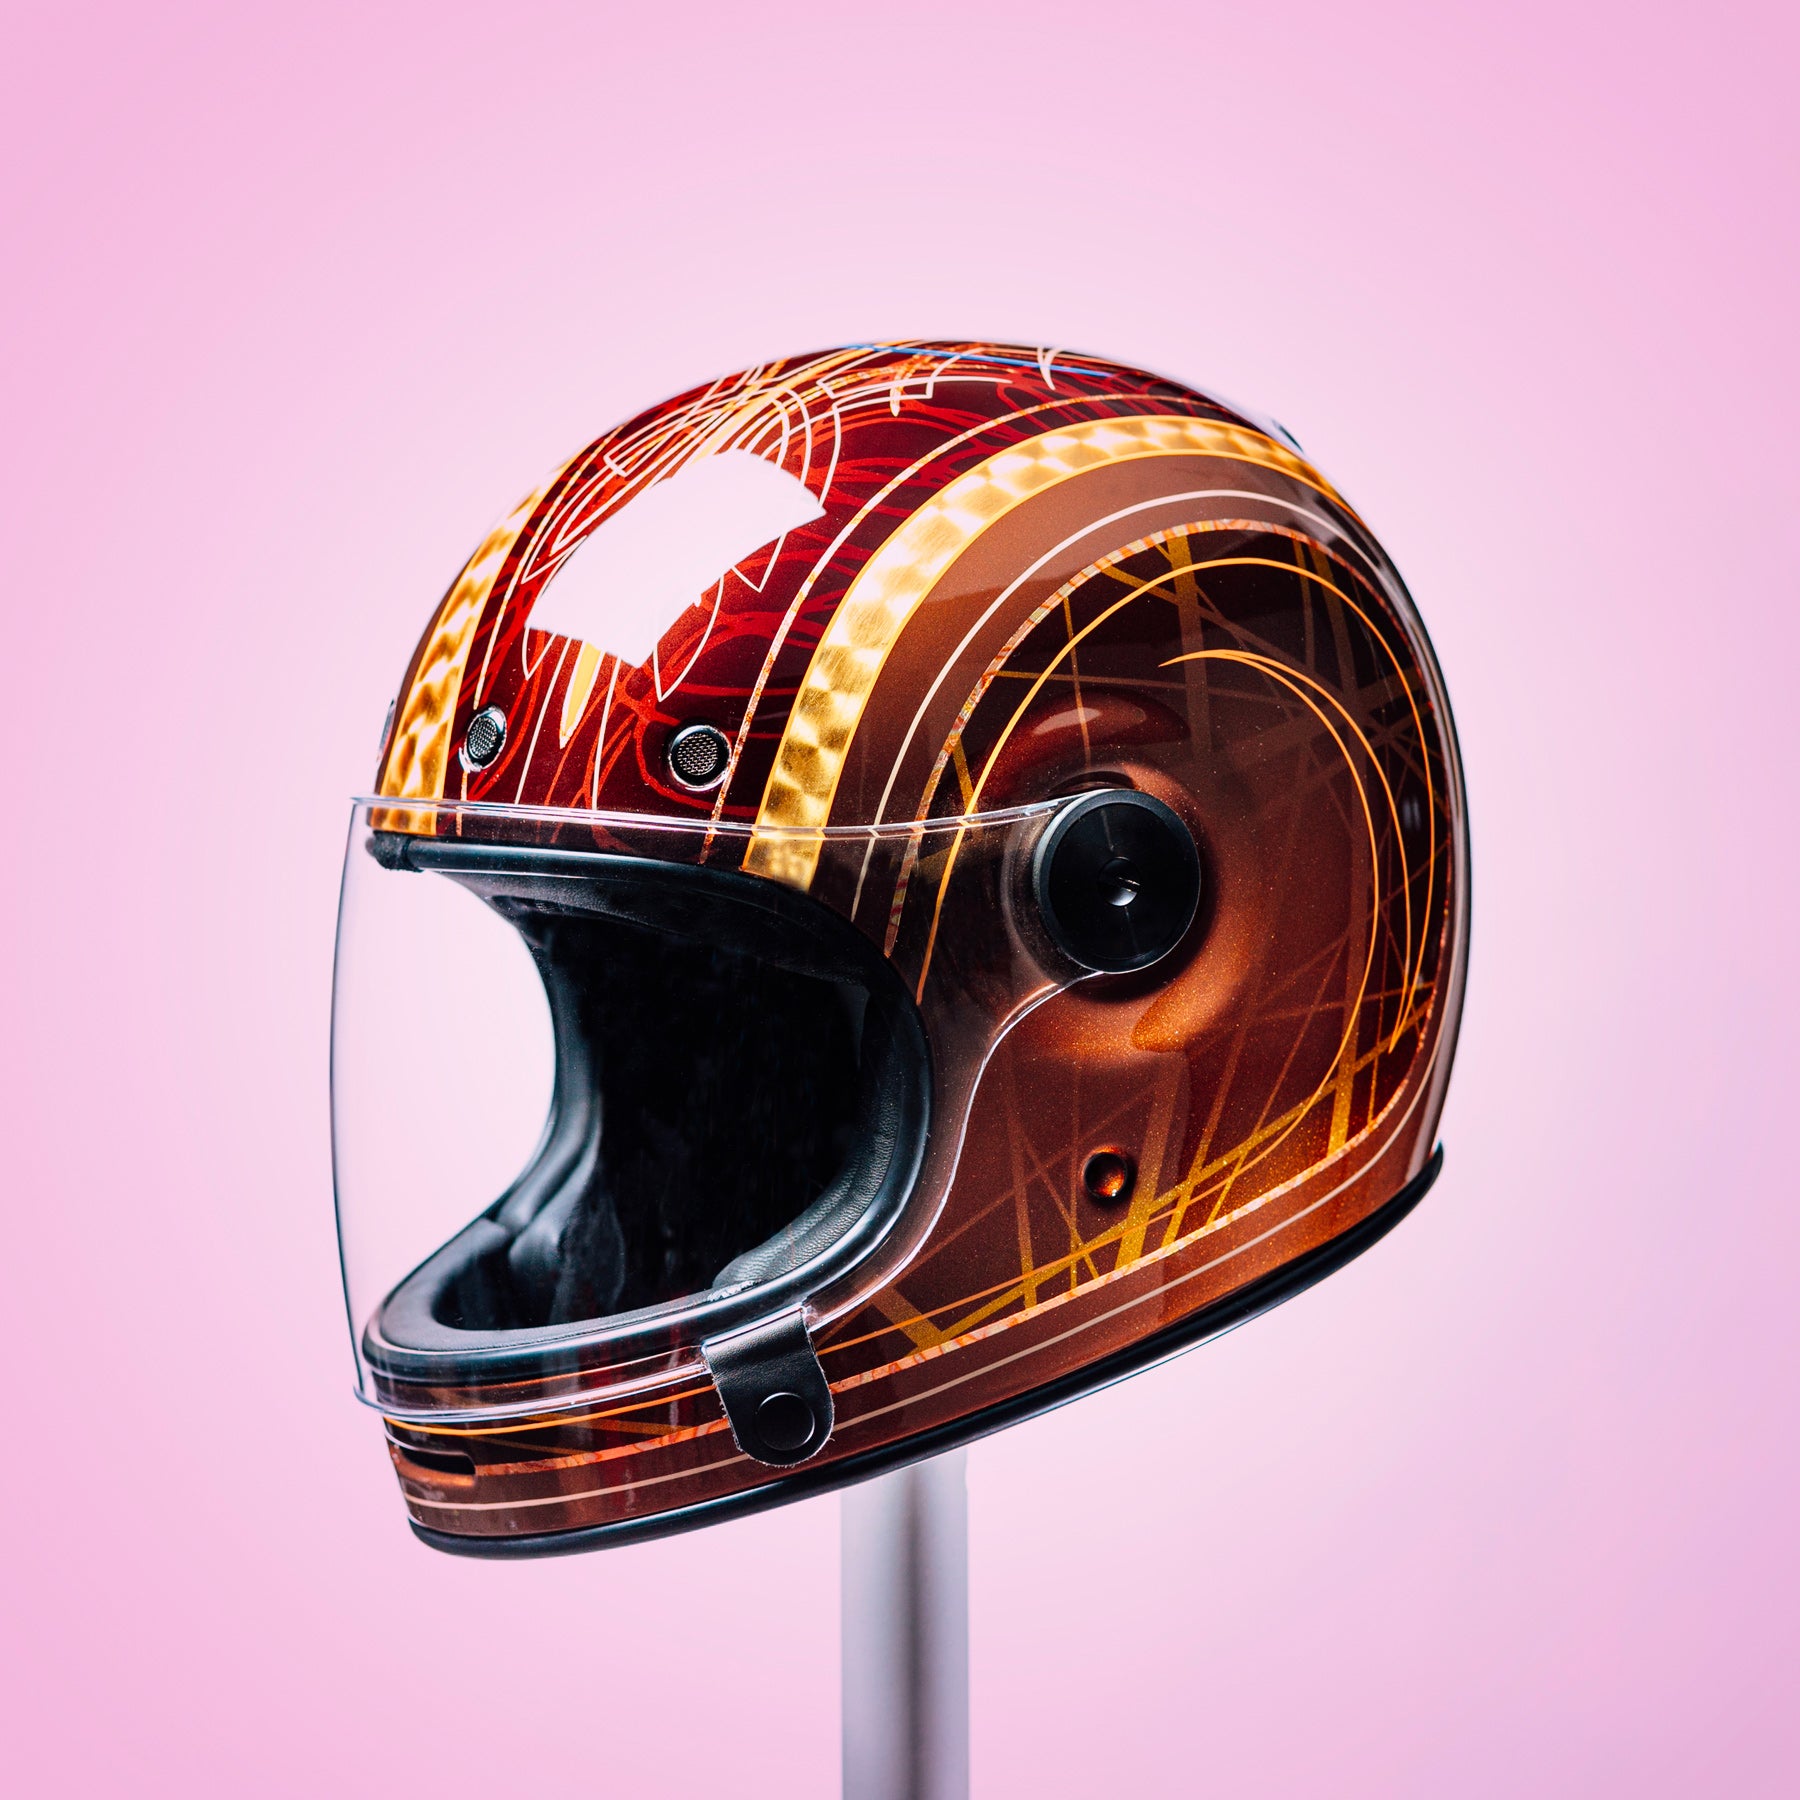 Trippy Ten helmet art show Pittsburgh Glory Daze motorcycle show Kurt Alexa Diserio Bell Helmets Jeremy Seanor